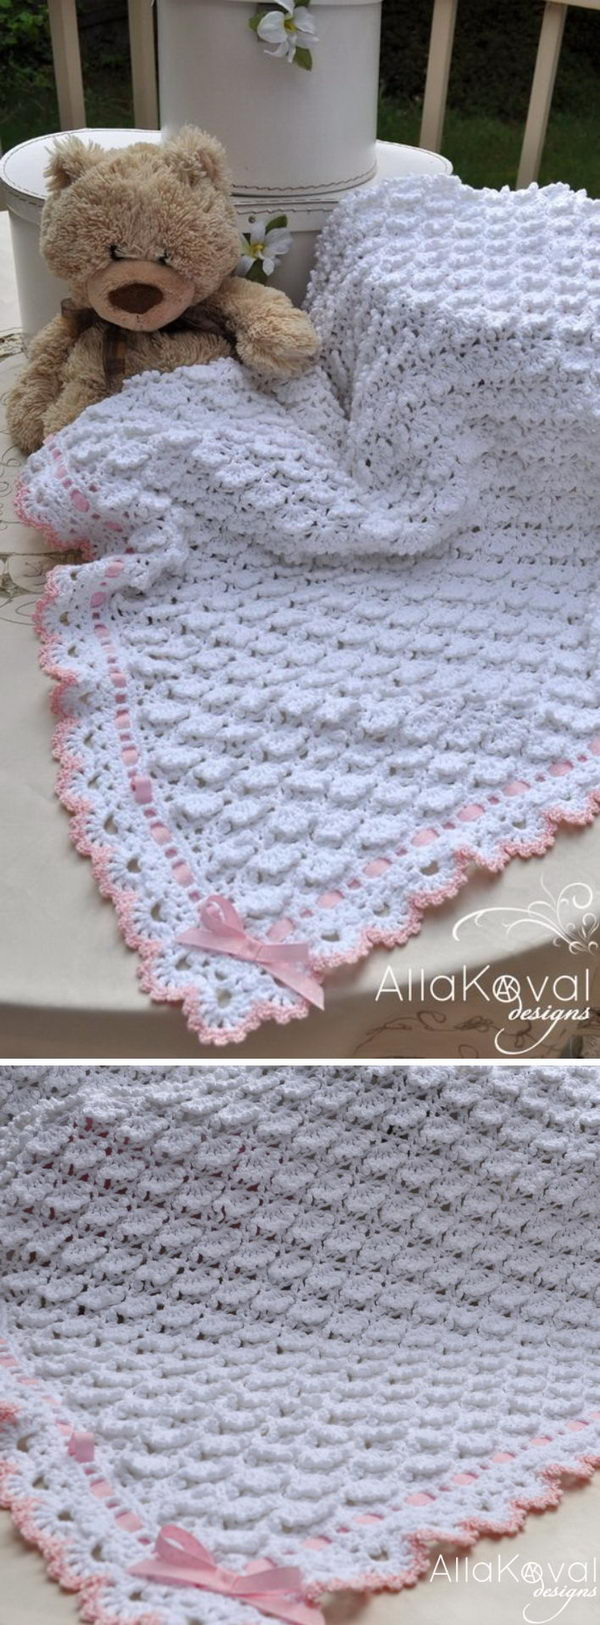 Free Baby Boy Crochet Patterns 30 Free Crochet Patterns For Blankets Hative